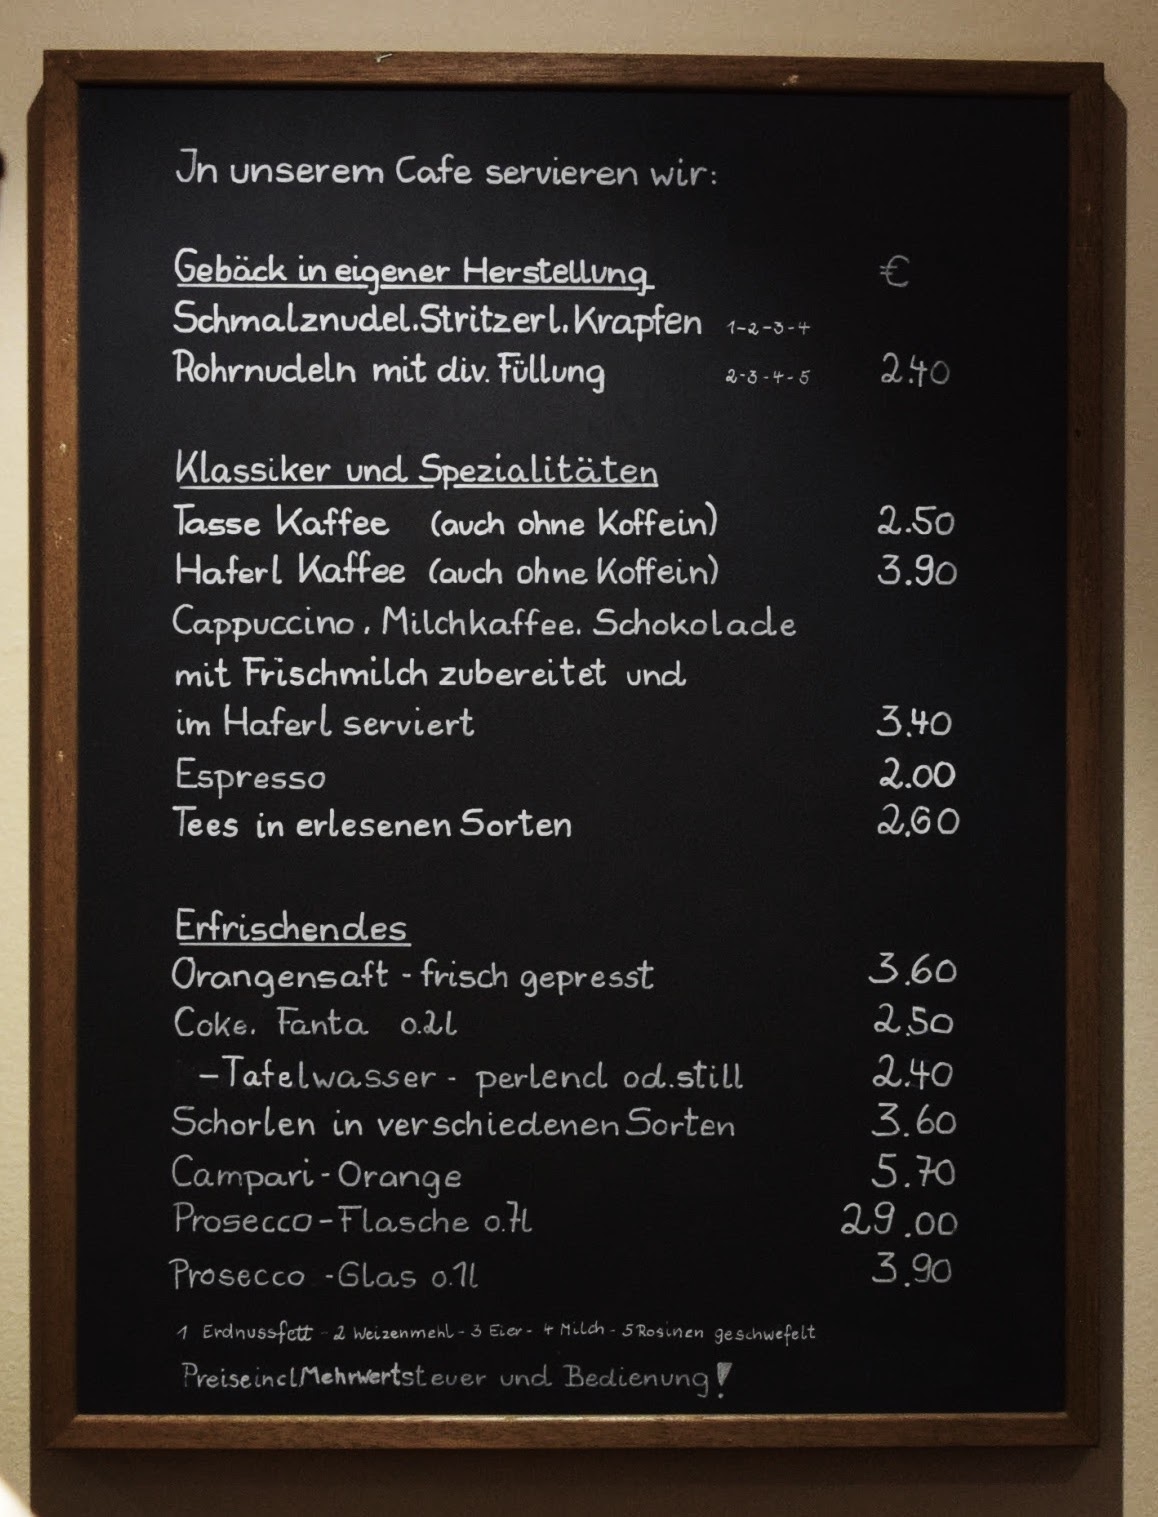 Cafe Frischhut Schmalznudel Menu